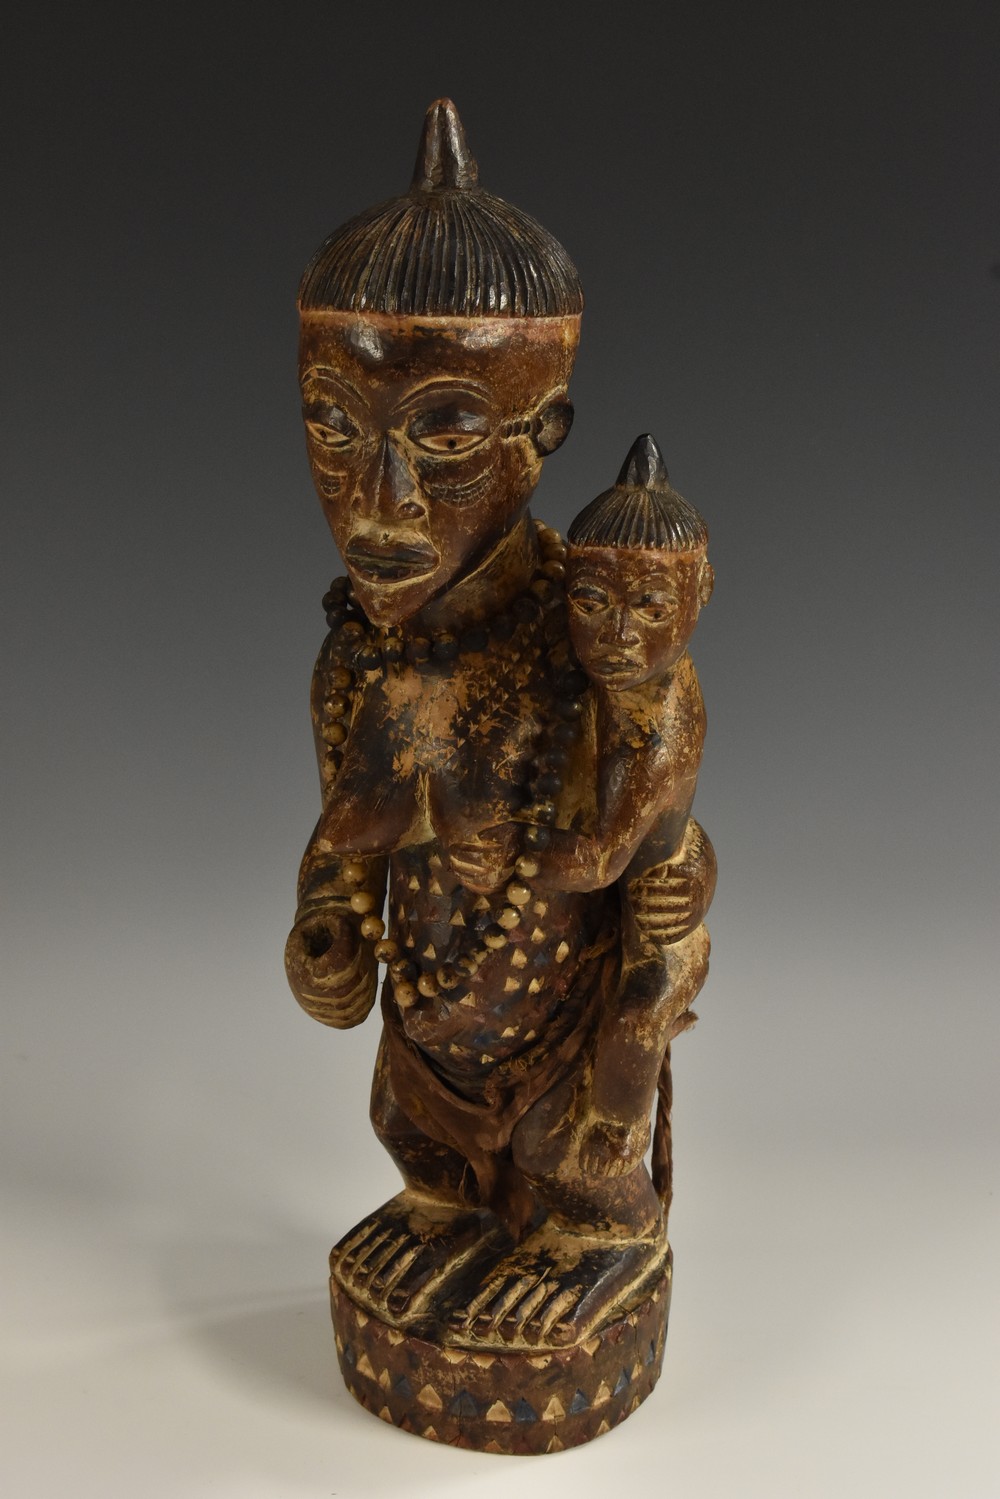 Tribal Art - an African fertility figure, she stands, holding an infant,